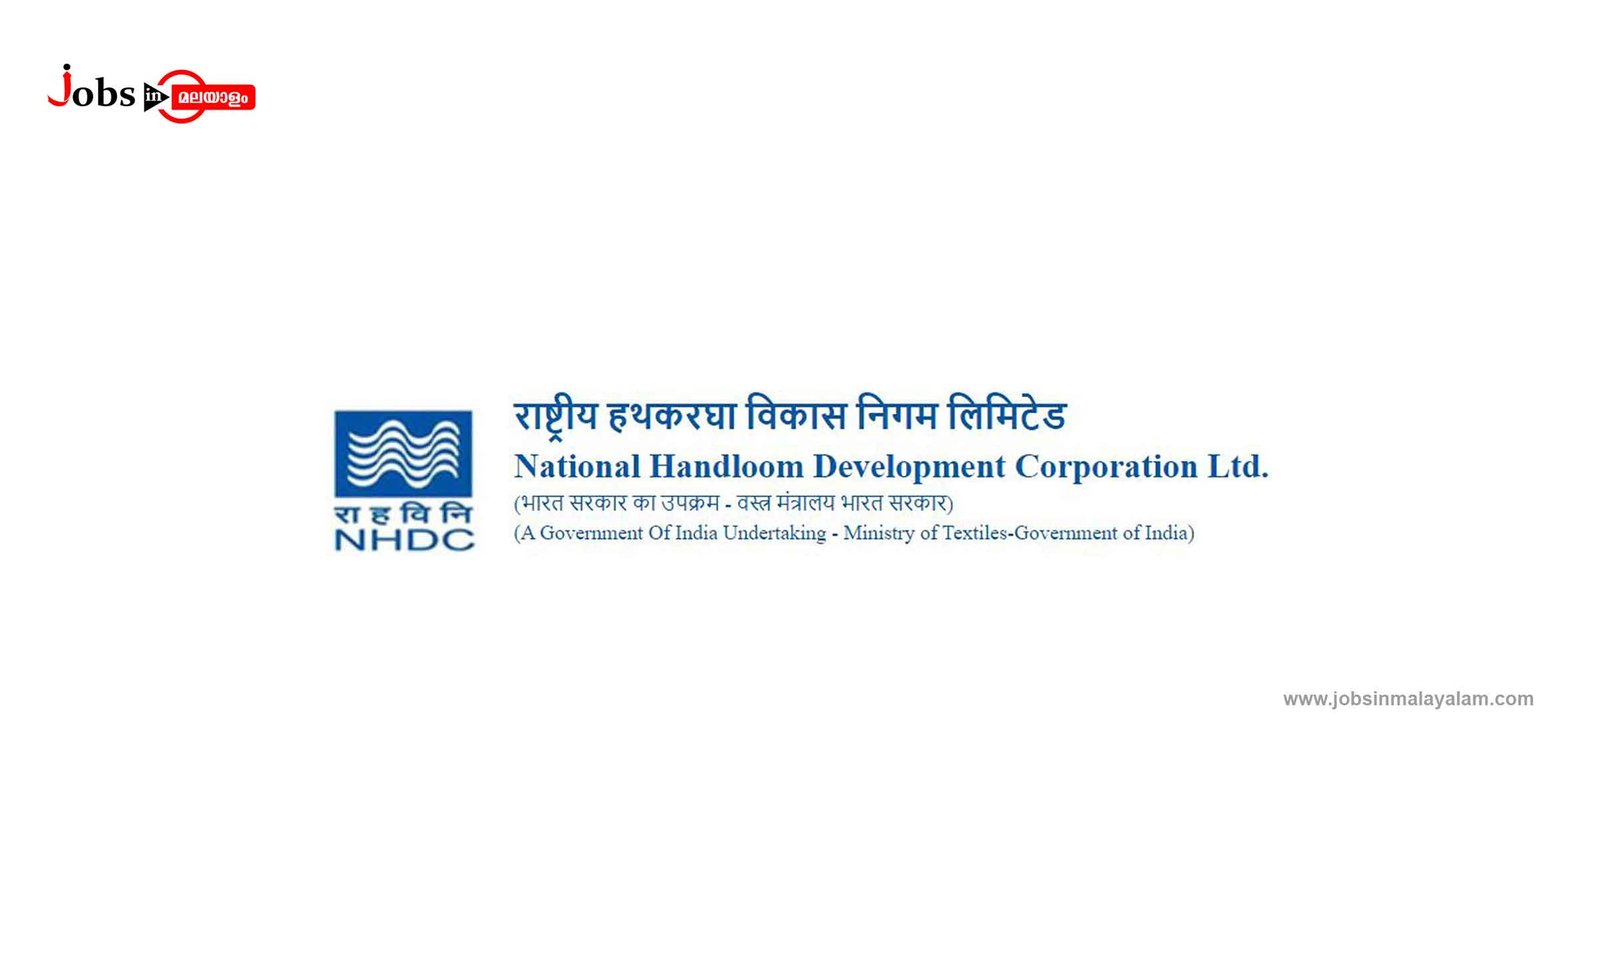 National Handloom Development Corporation Ltd